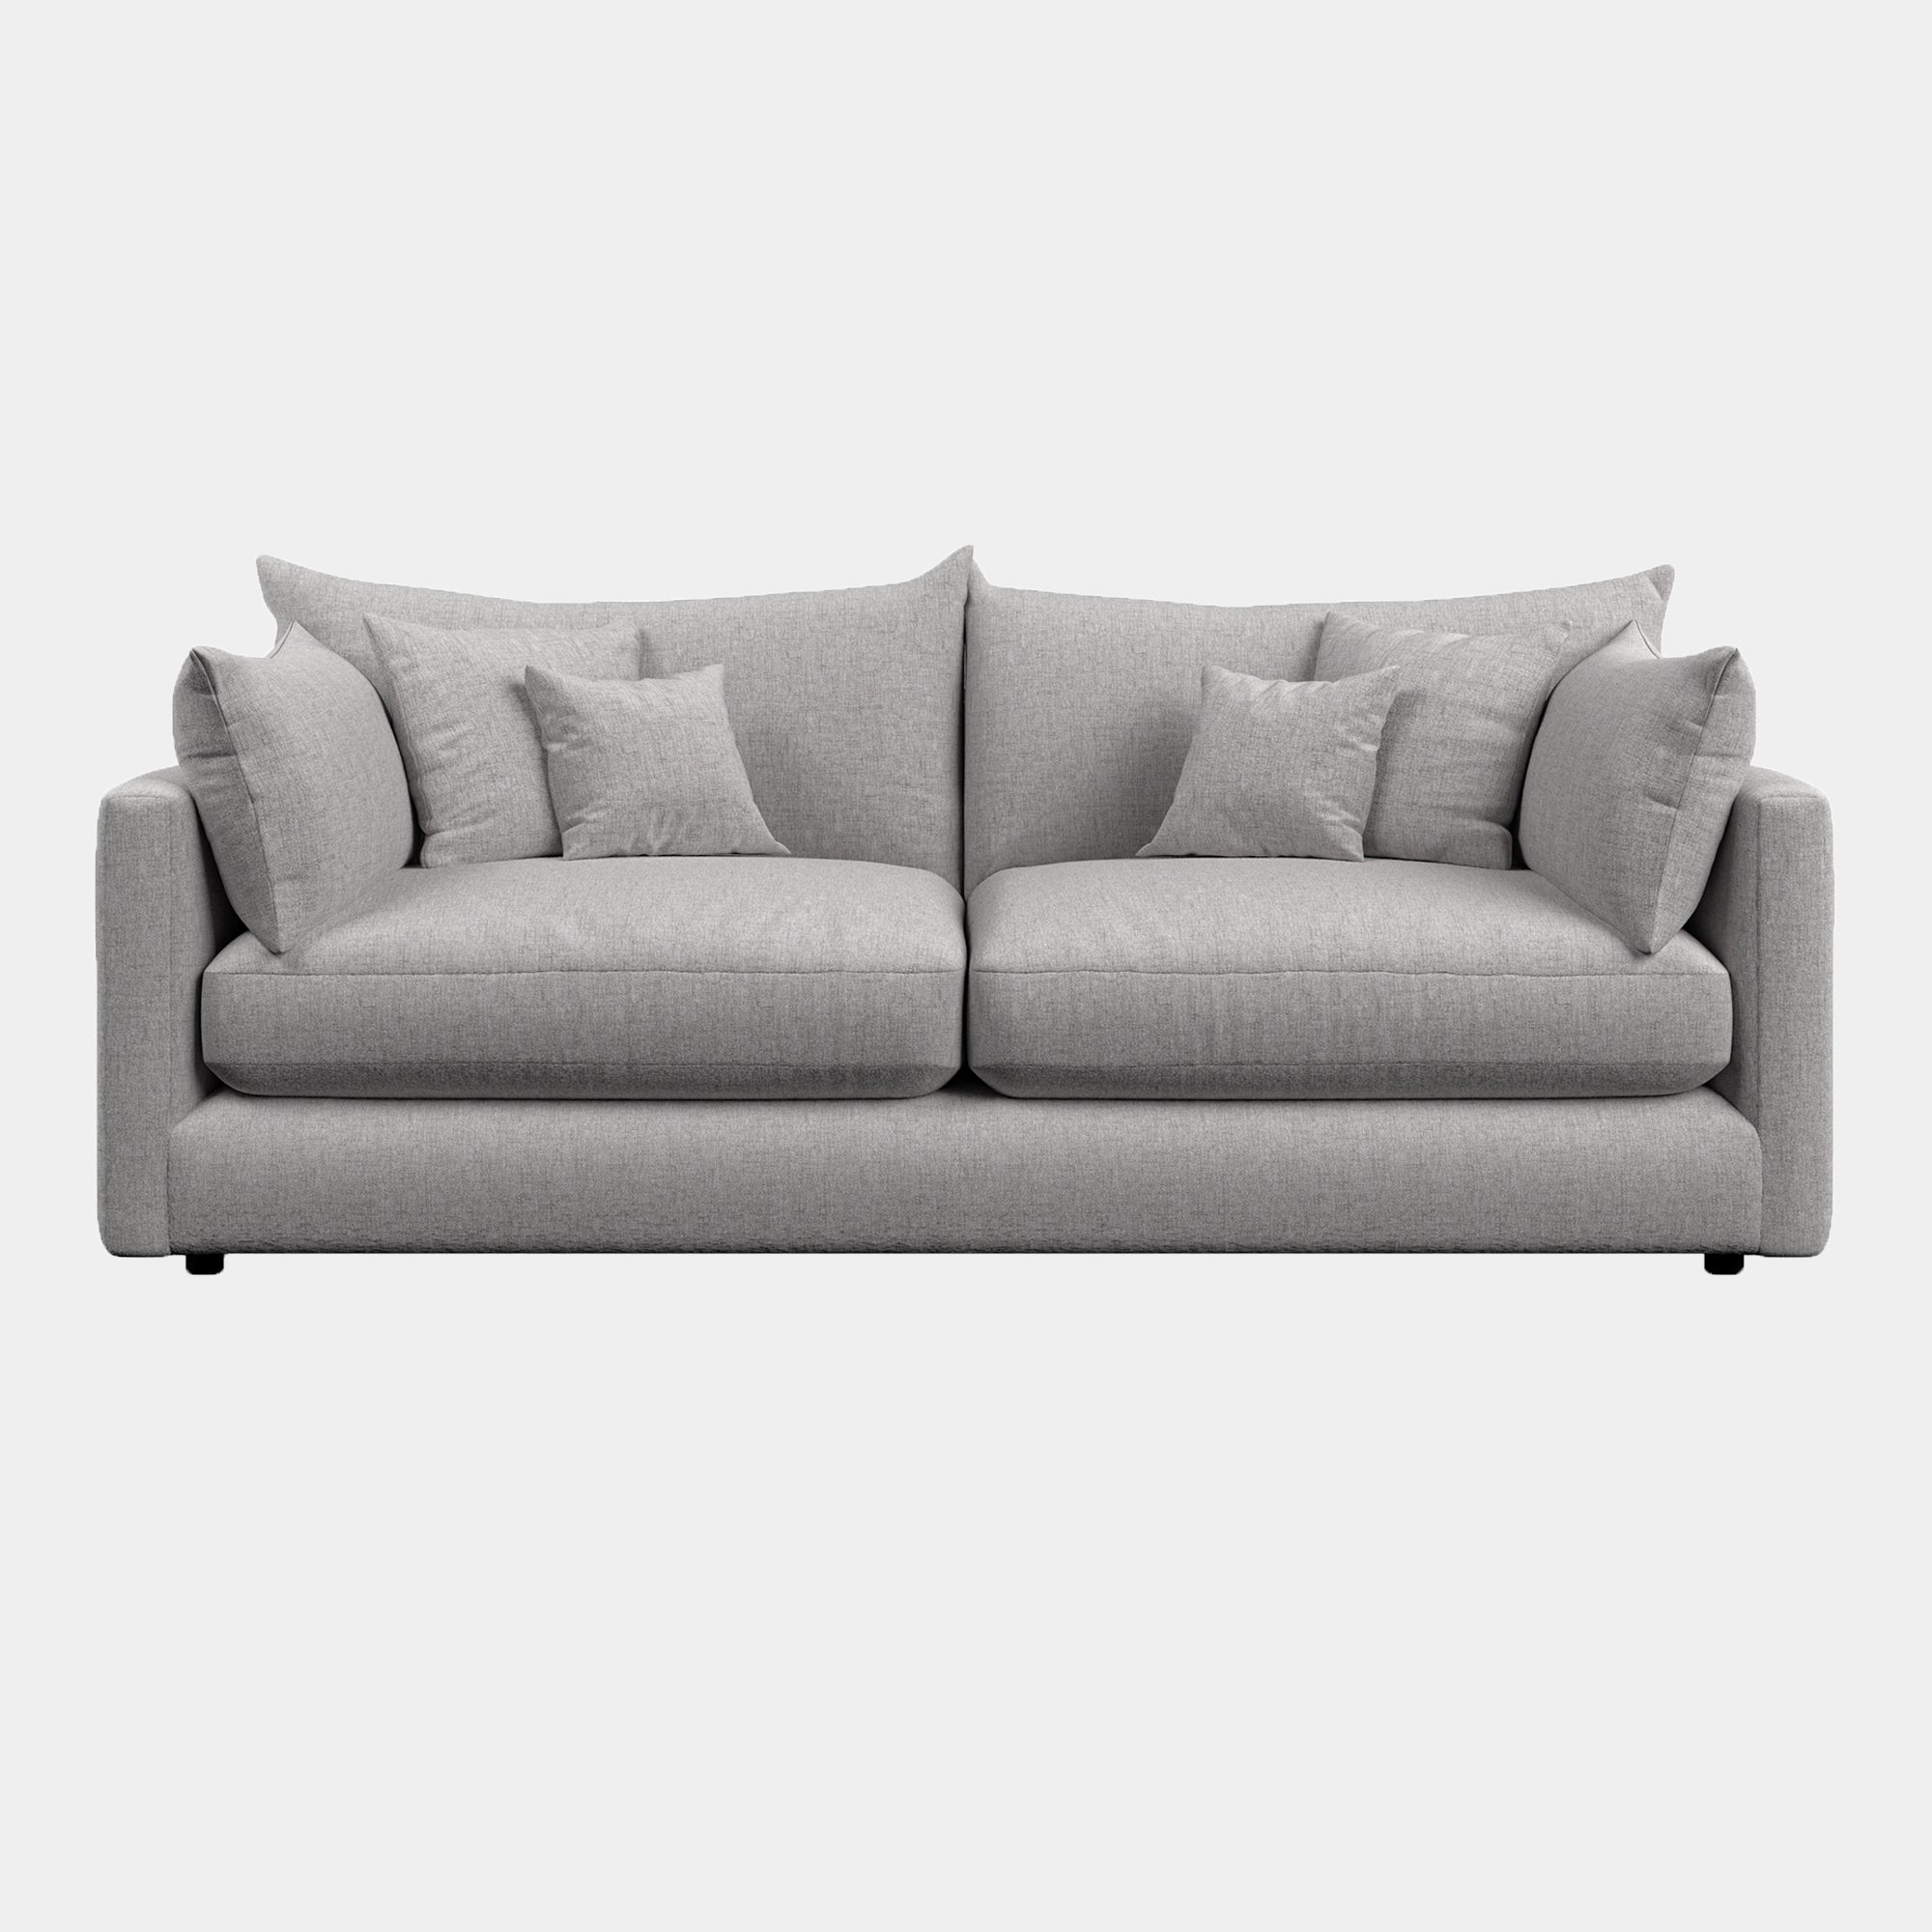 Santa Fe - Large Sofa In Grade C Fabric